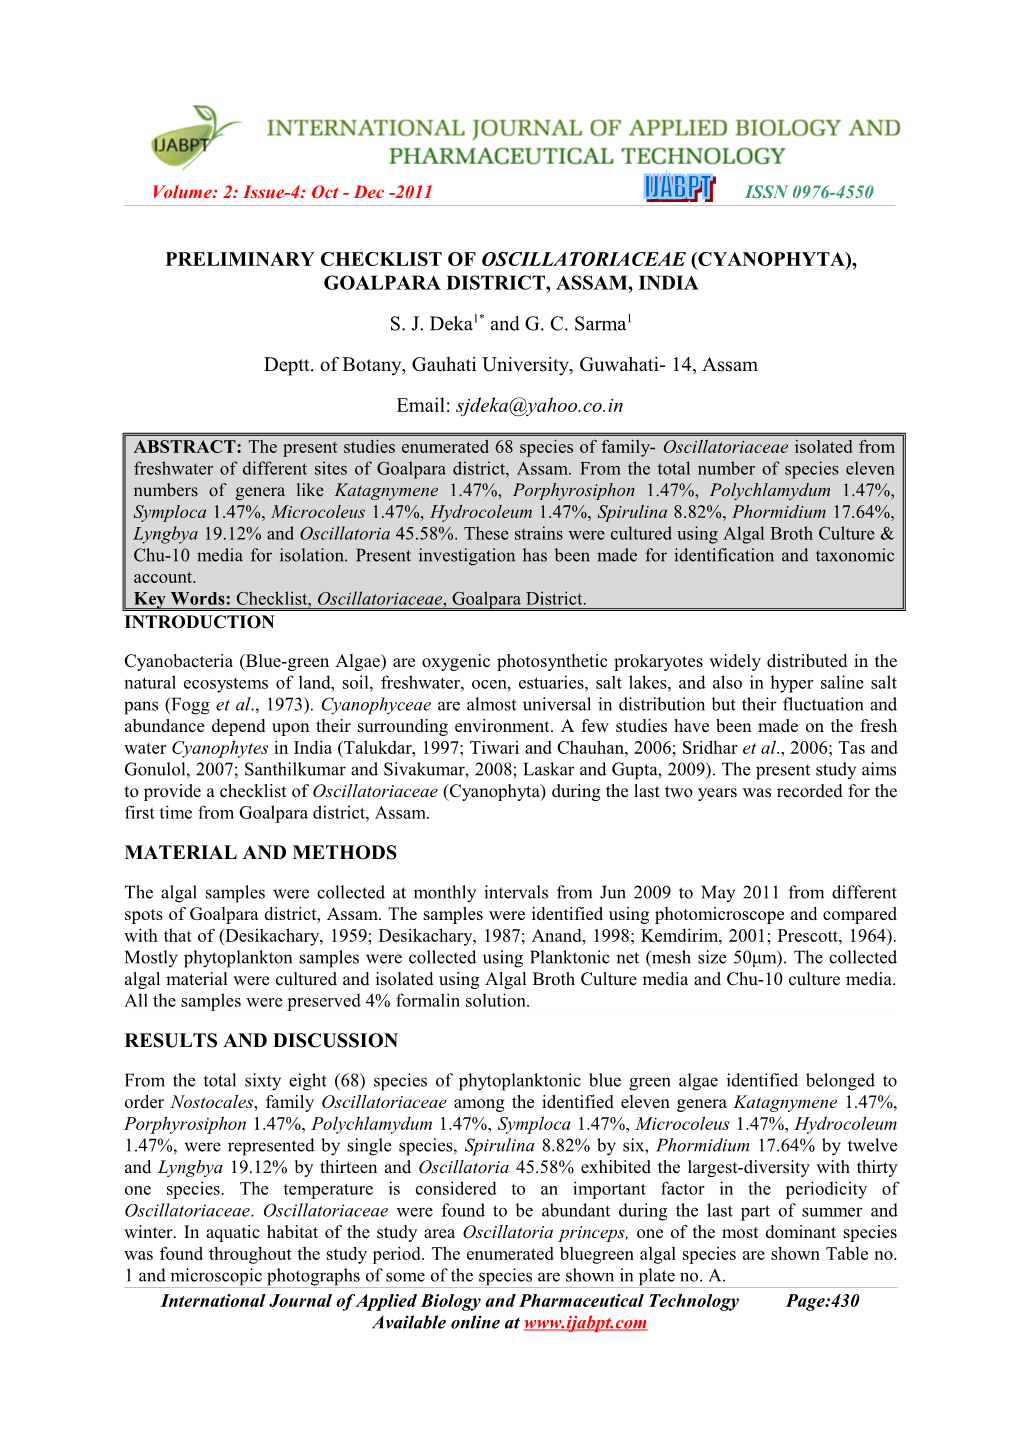 Preliminary Checklist of Oscillatoriaceae (Cyanophyta), Goalpara District, Assam, India S